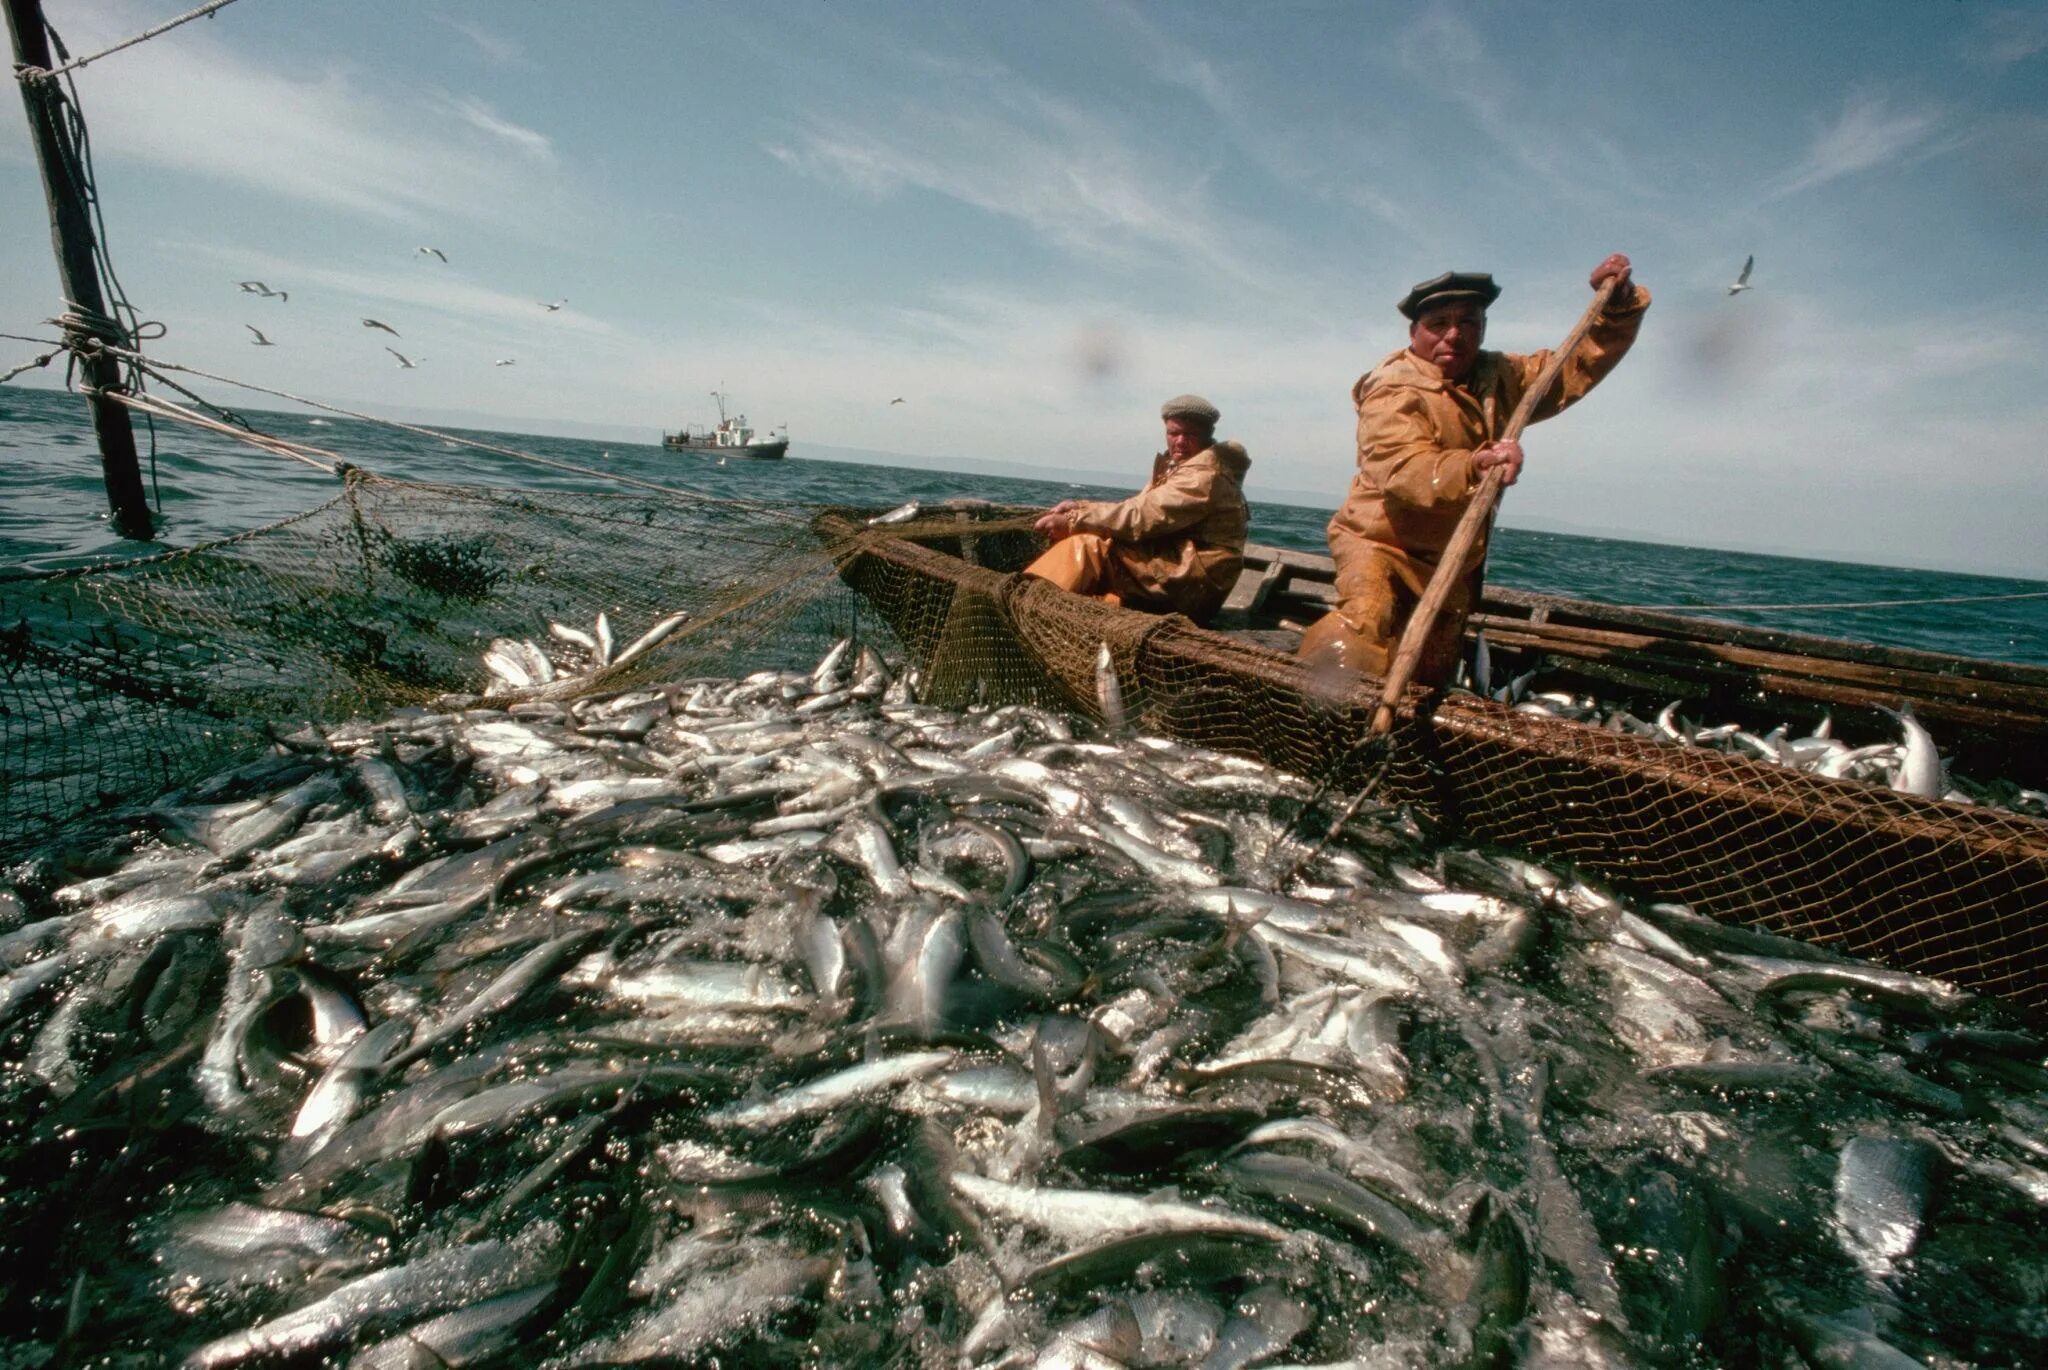 Озеро Байкал рыболовля. Озеро Байкал рыбный промысел. Рыболовный промысел оз. Байкал. Байкальский омуль рыбозавод Байкал. Какую рыбу ловили рыбаки